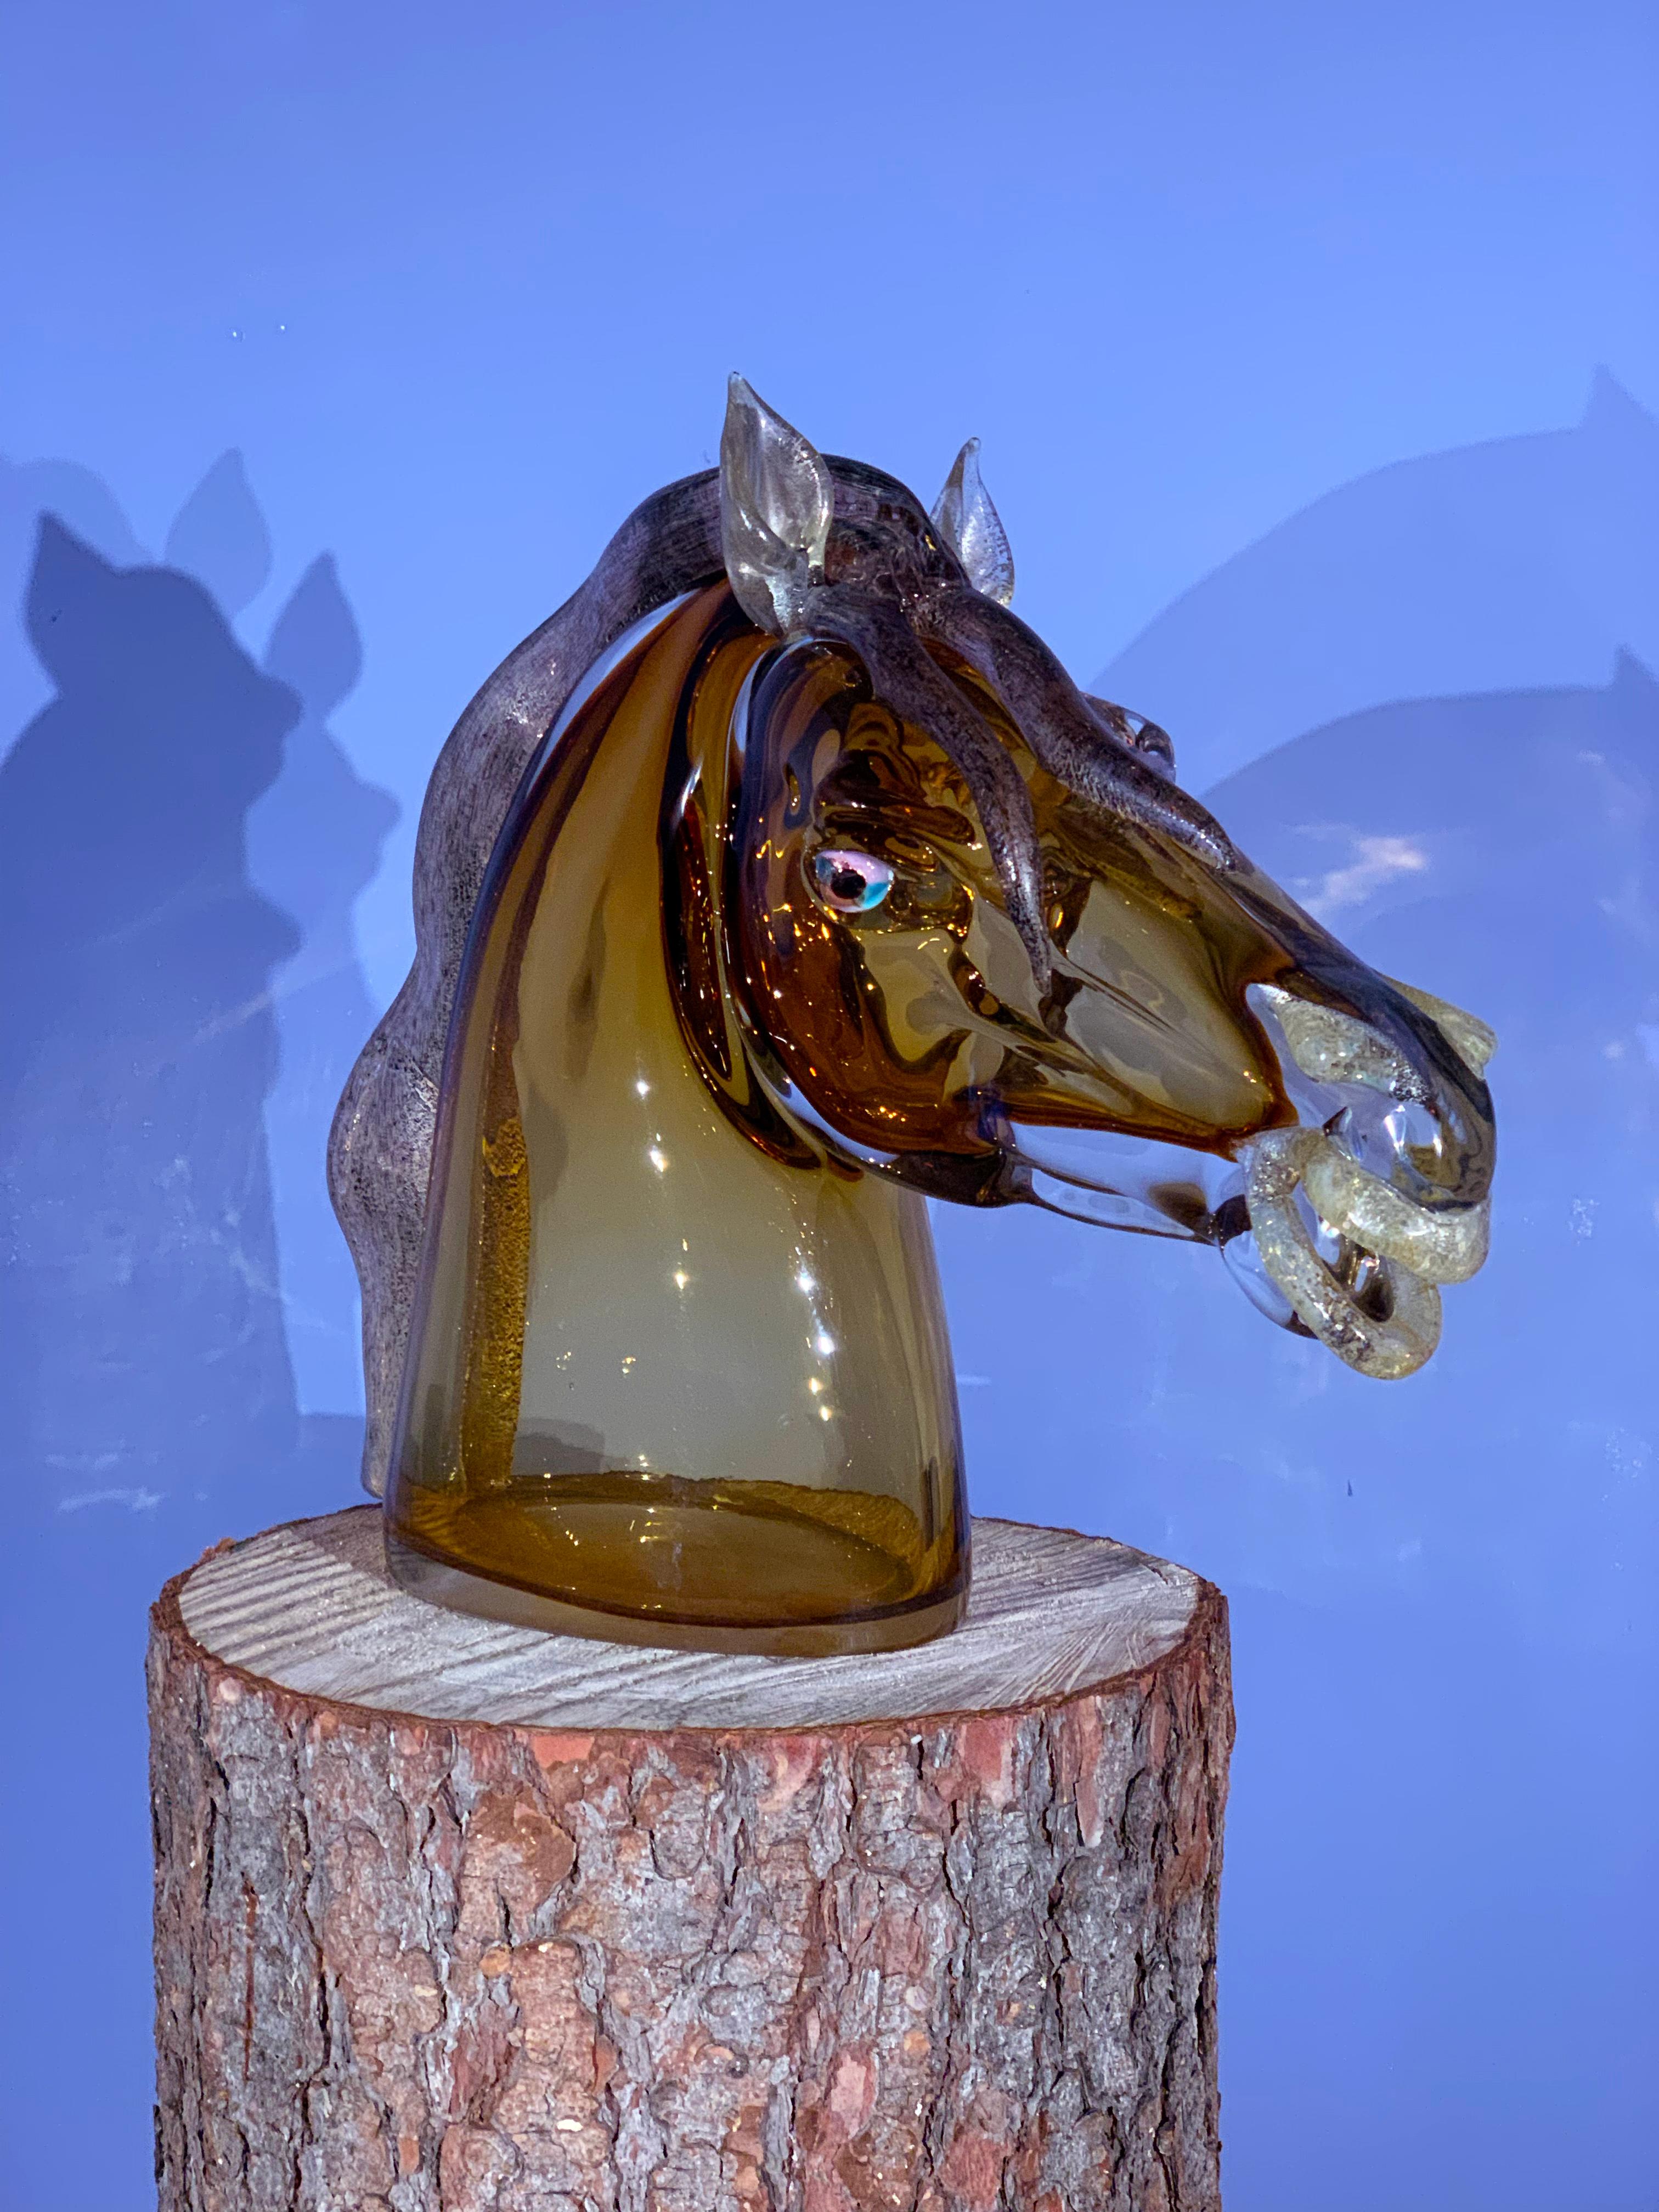 hugh findletar Figurative Sculpture - Horsehead